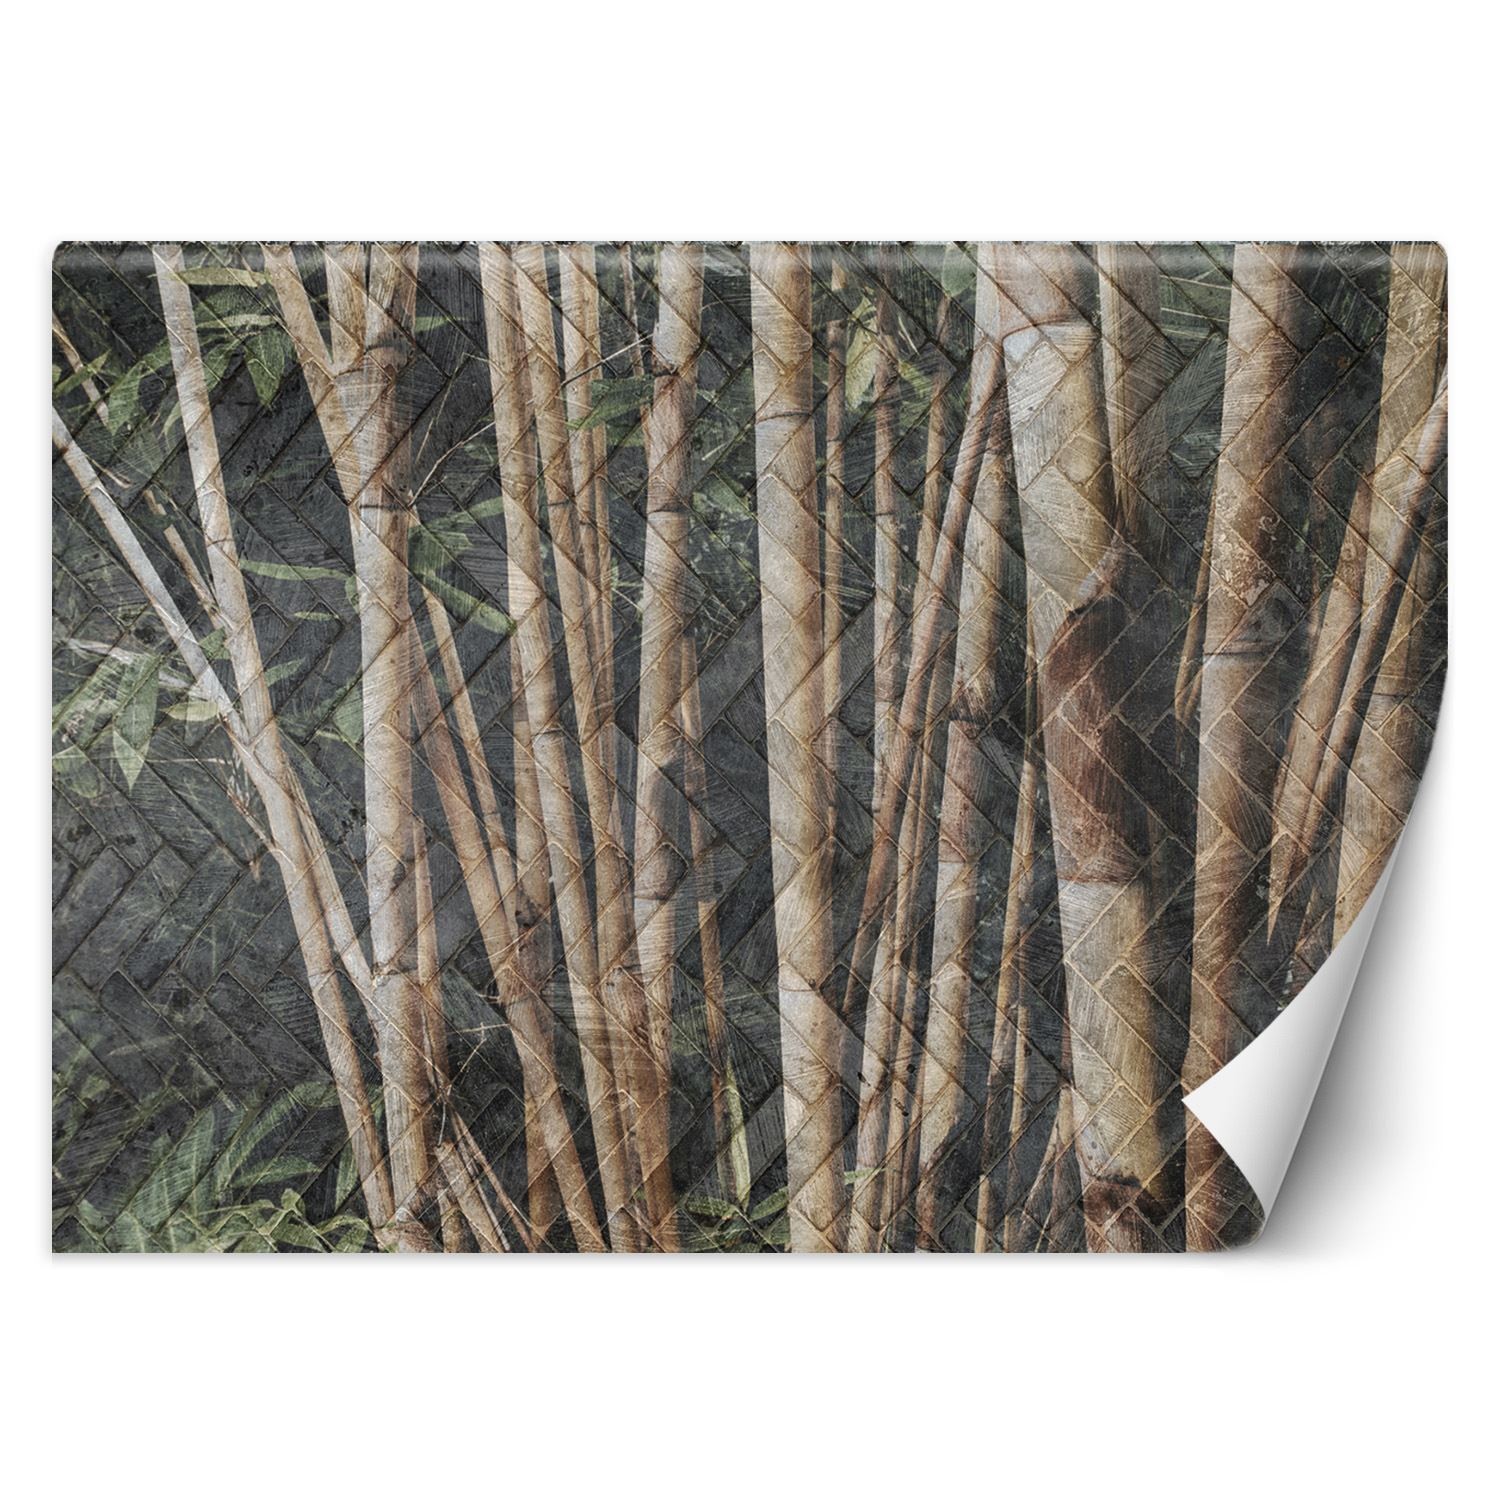 Trend24 – Behang – Bamboo Forest – Behangpapier – Behang Woonkamer – Fotobehang – 200x140x2 cm – Incl. behanglijm